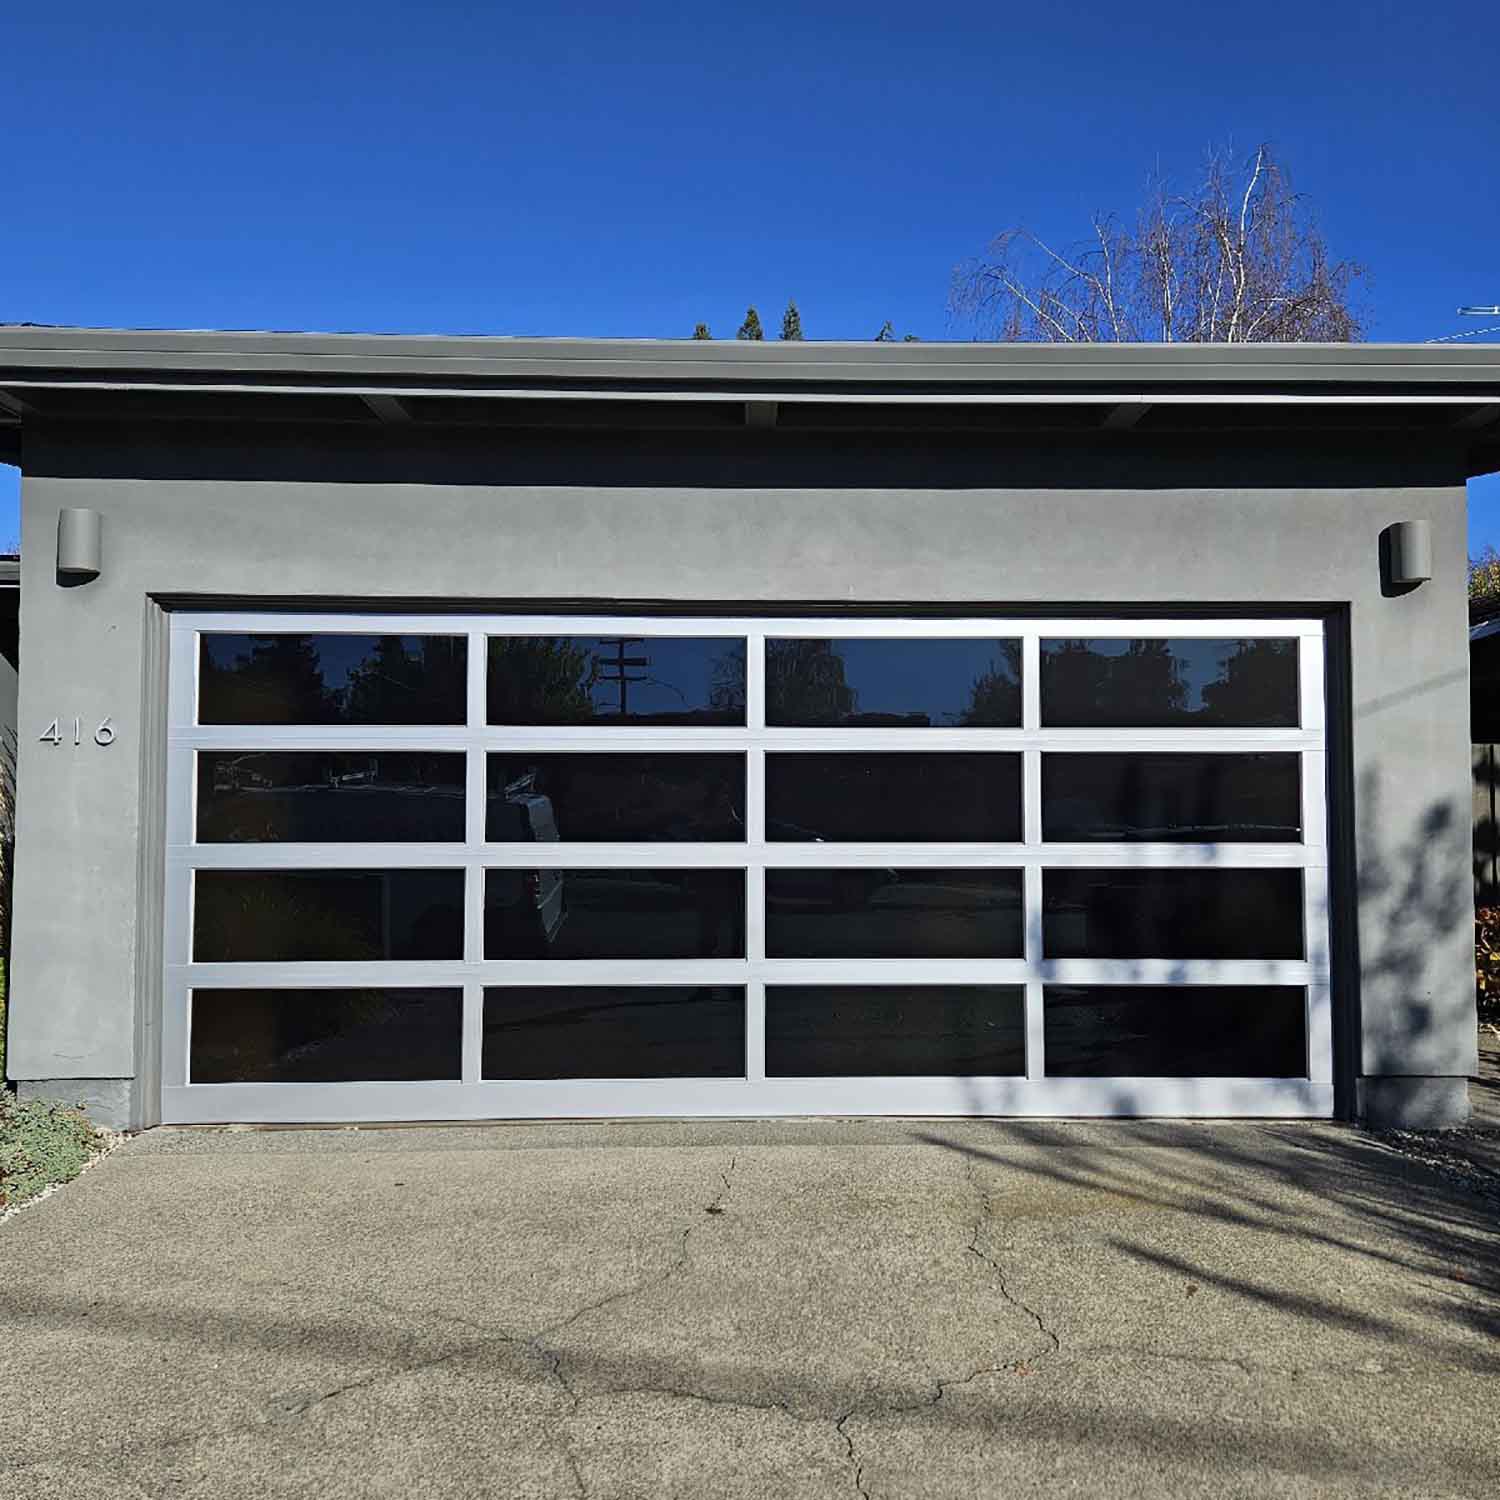 ClimatePro Installs 3M Window Film on Garage Windows in Sonoma, CA